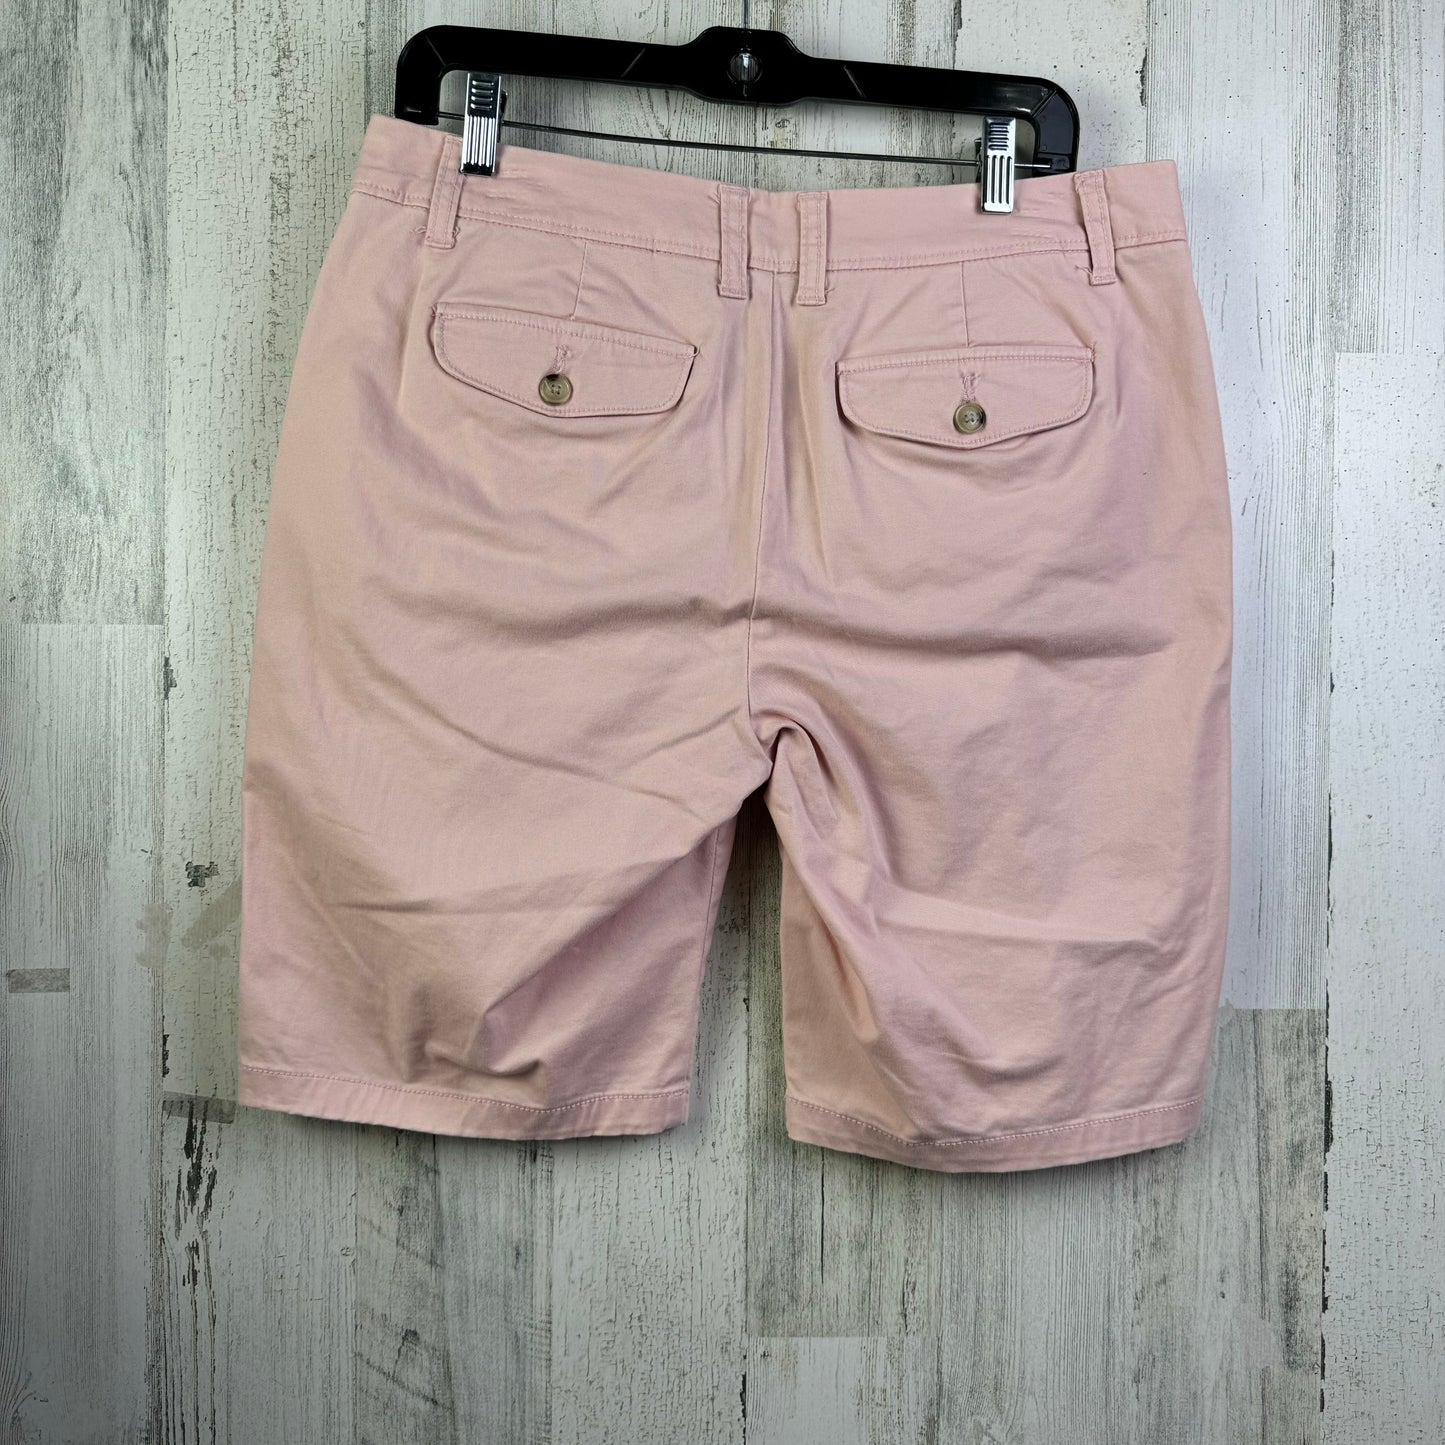 Pink Shorts Liz Claiborne, Size 8